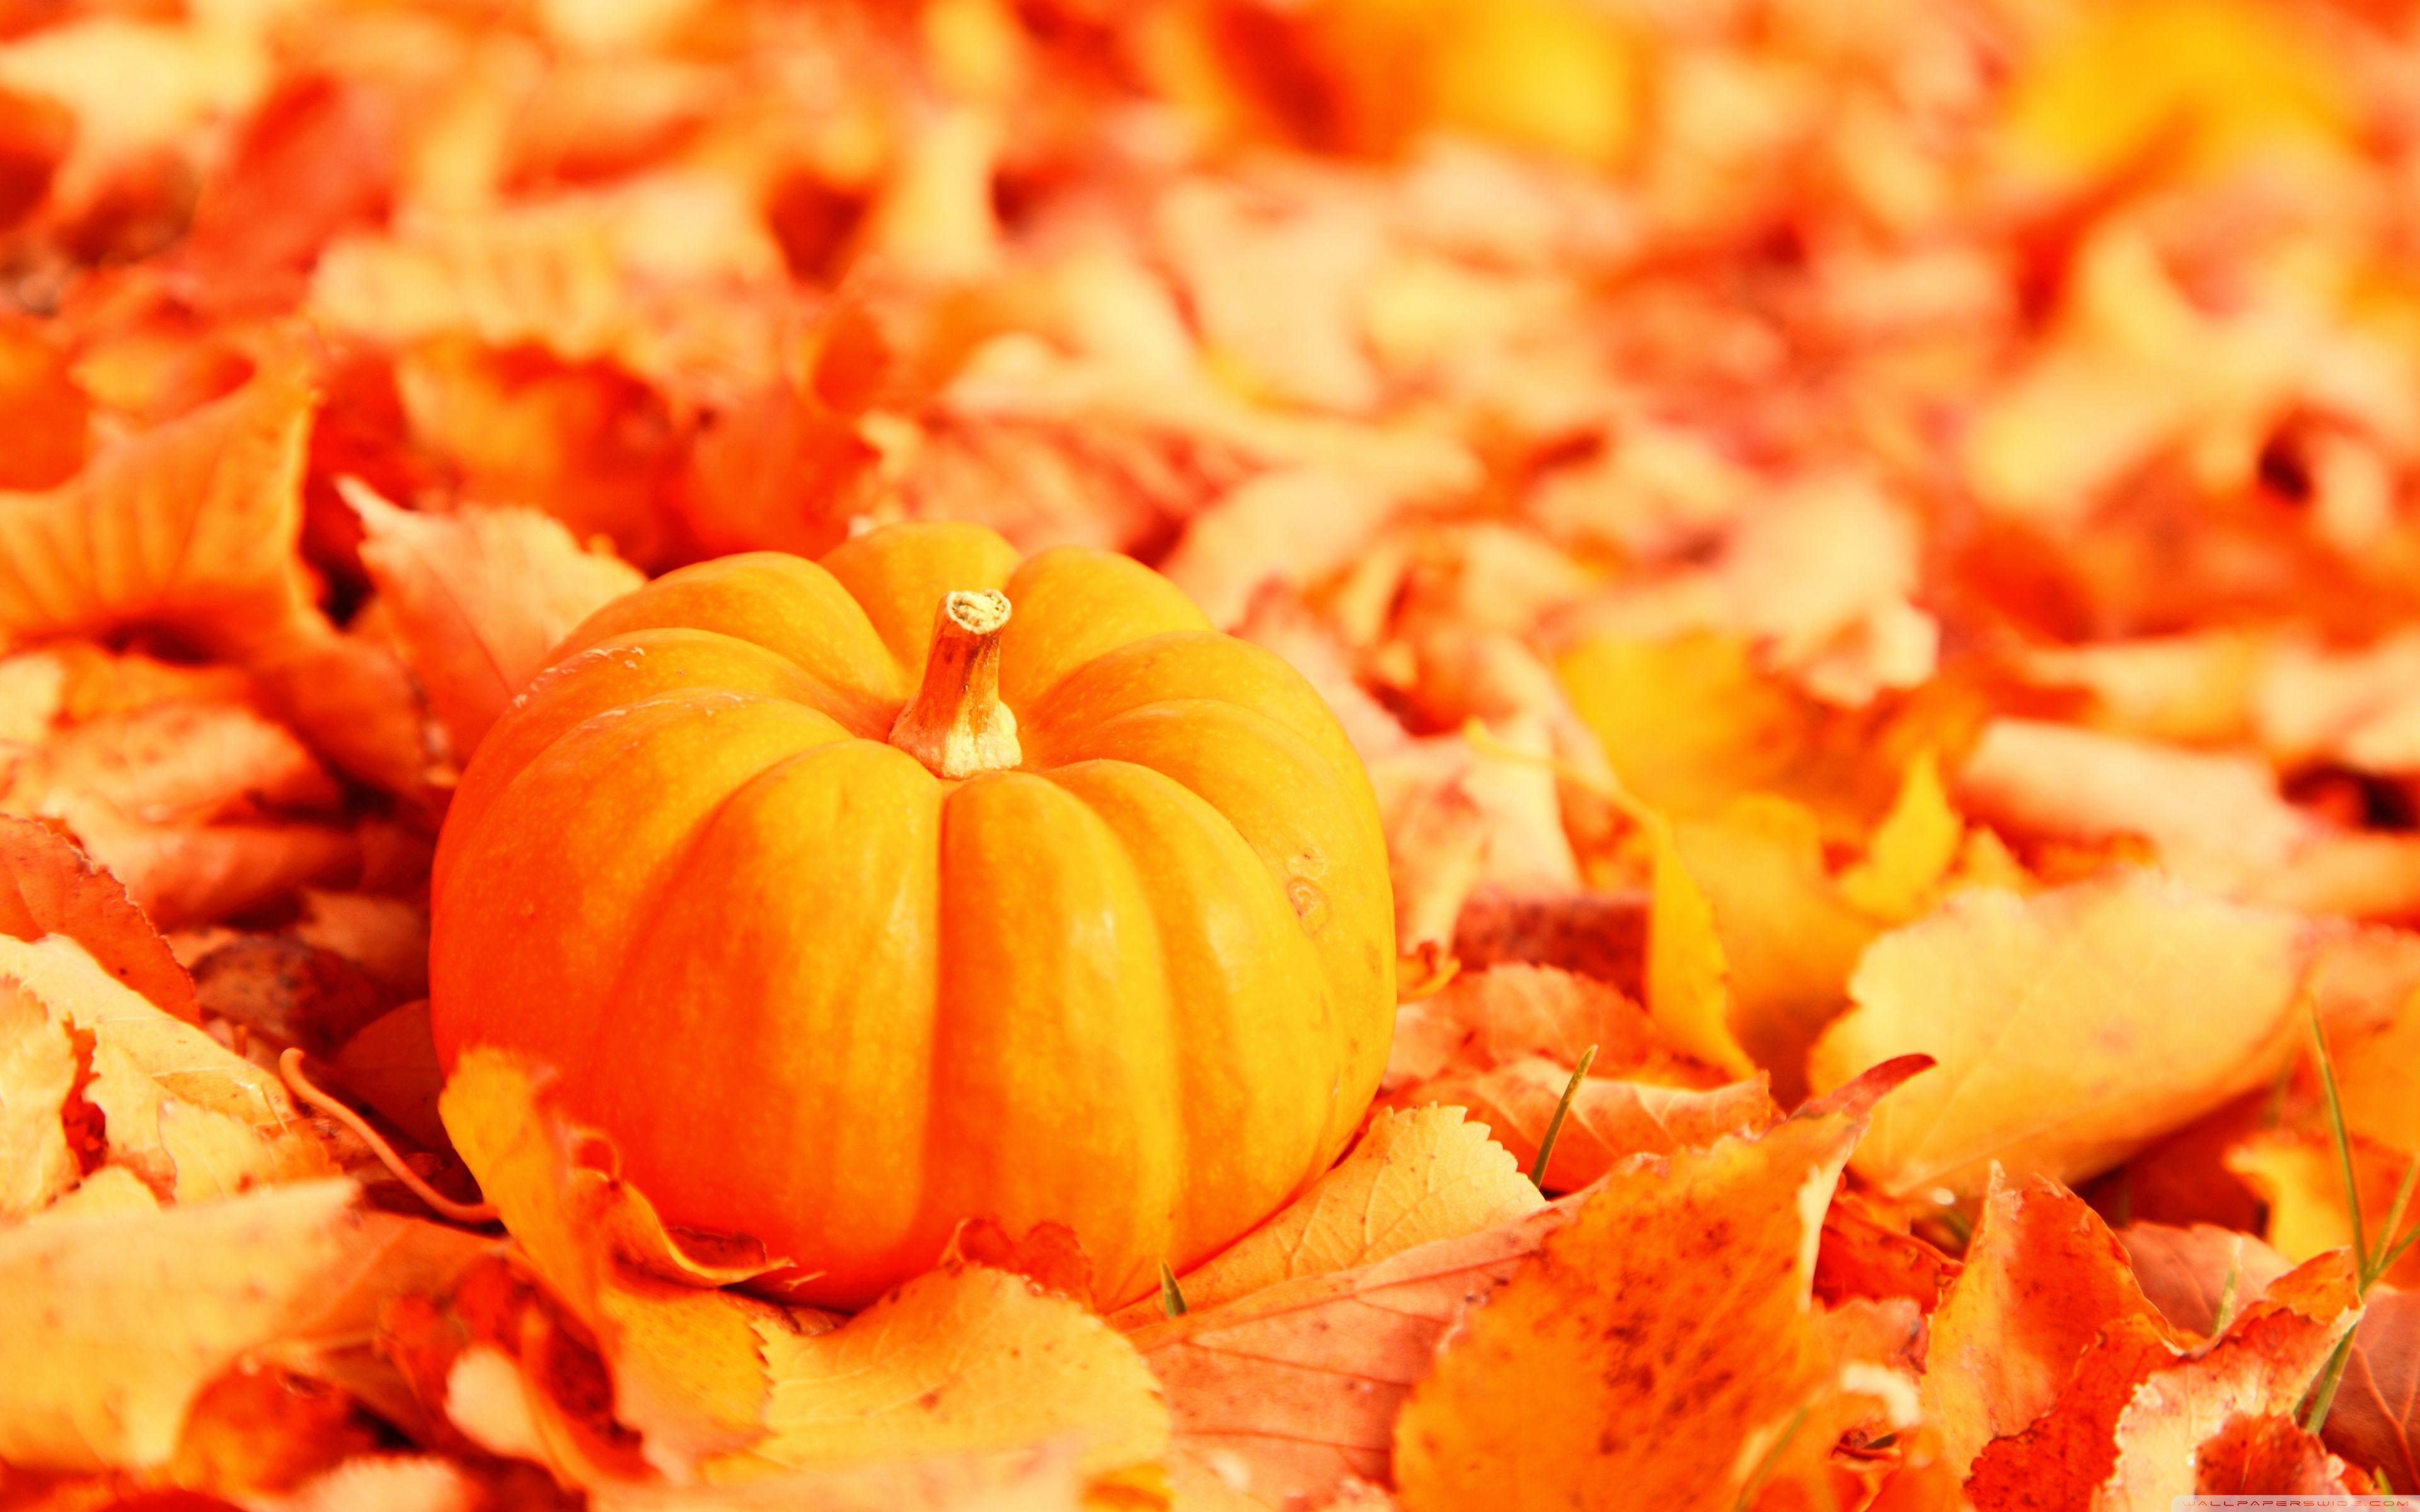 Pumpkin And Autumn Leaves Ultra HD Desktop Background Wallpaper for 4K UHD TV, Tablet